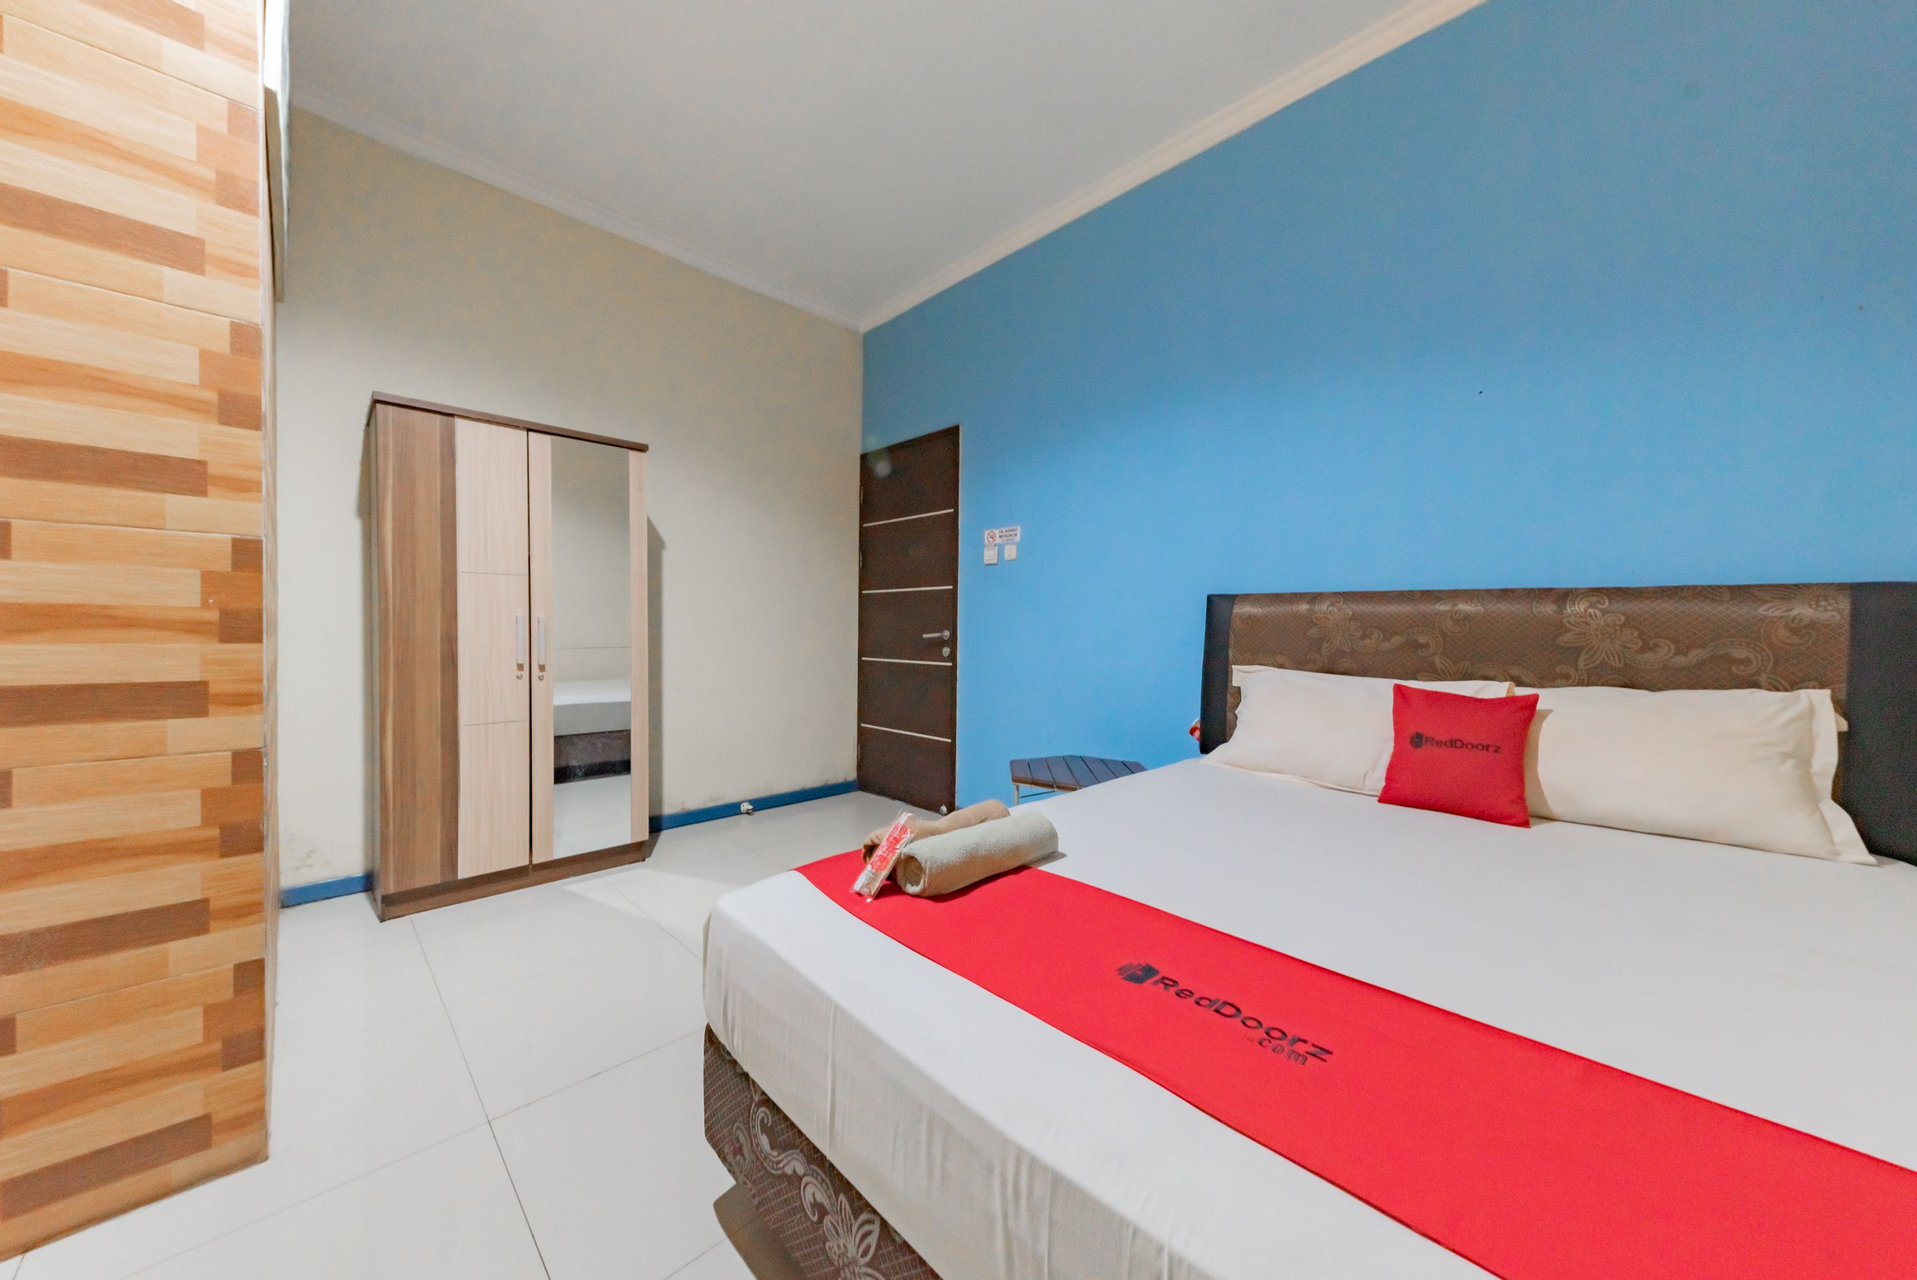 Bedroom 1, RedDoorz Syariah @ Pangeran Suryanata Samarinda, Samarinda